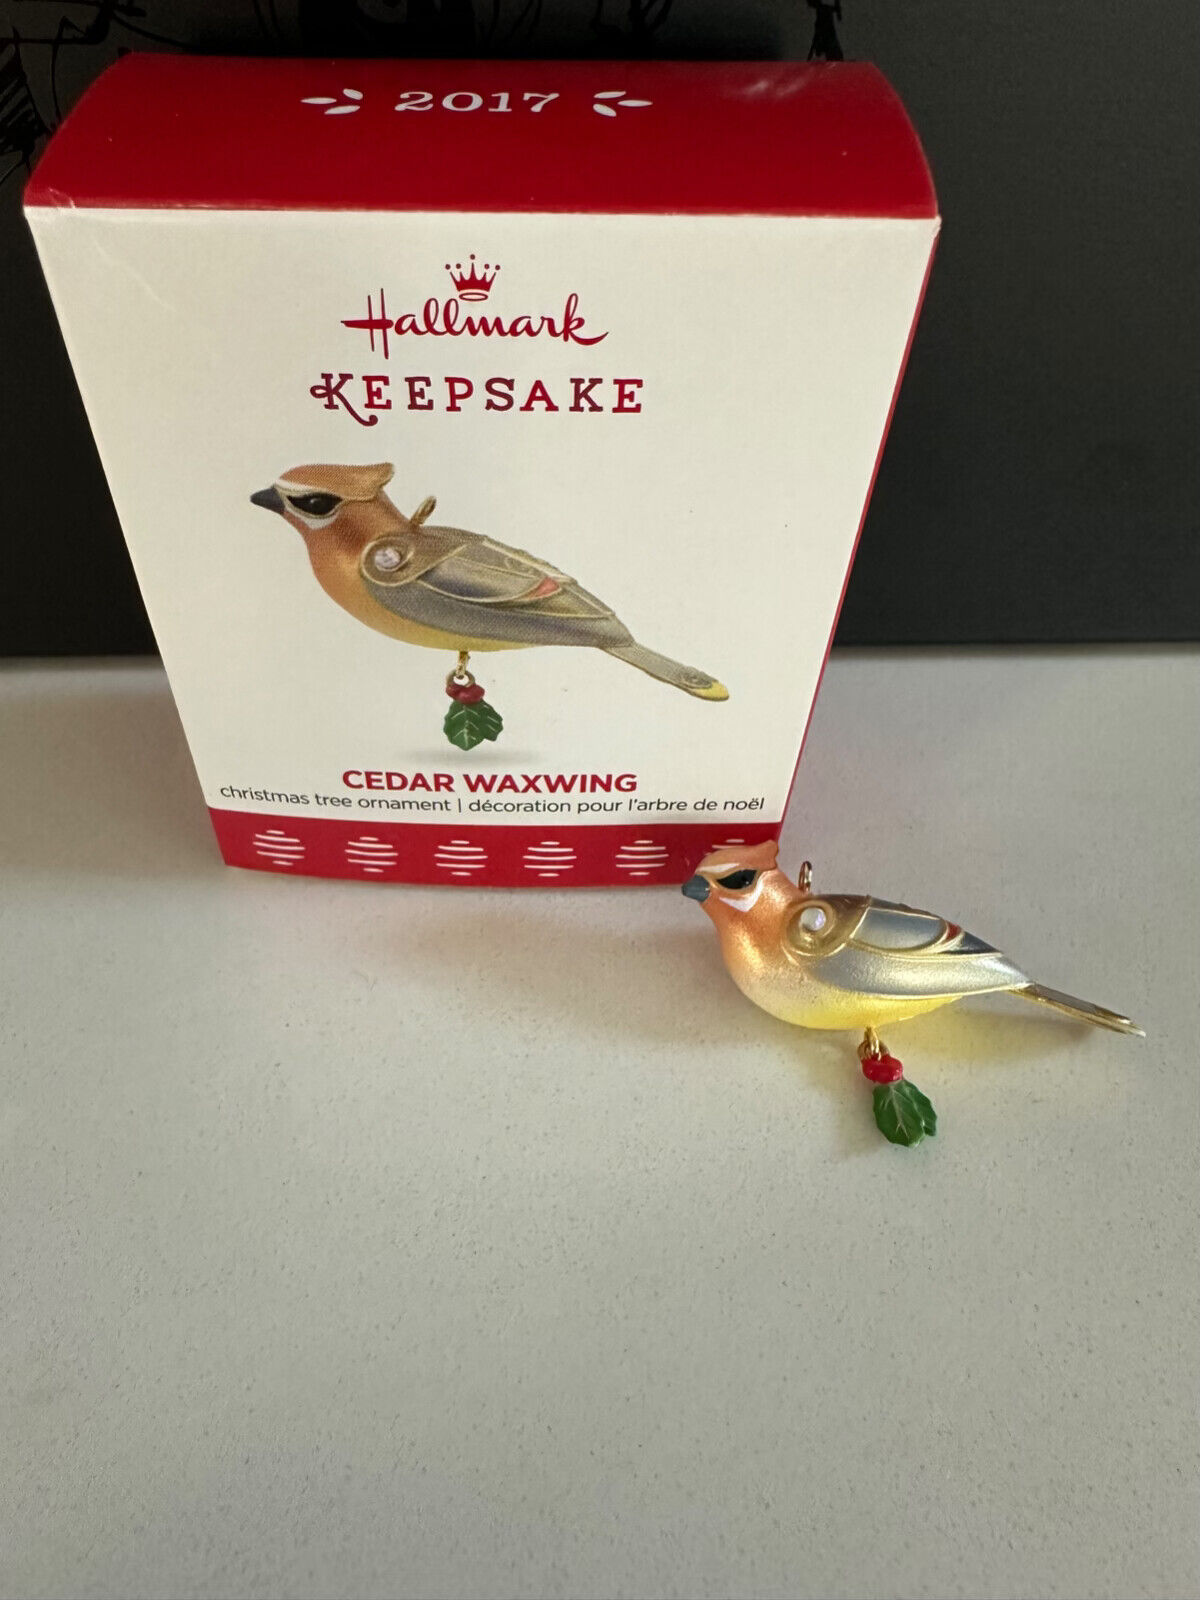 2017 Hallmark Keepsake Miniature Ornament Cedar Waxwing Beauty of Birds - NIB